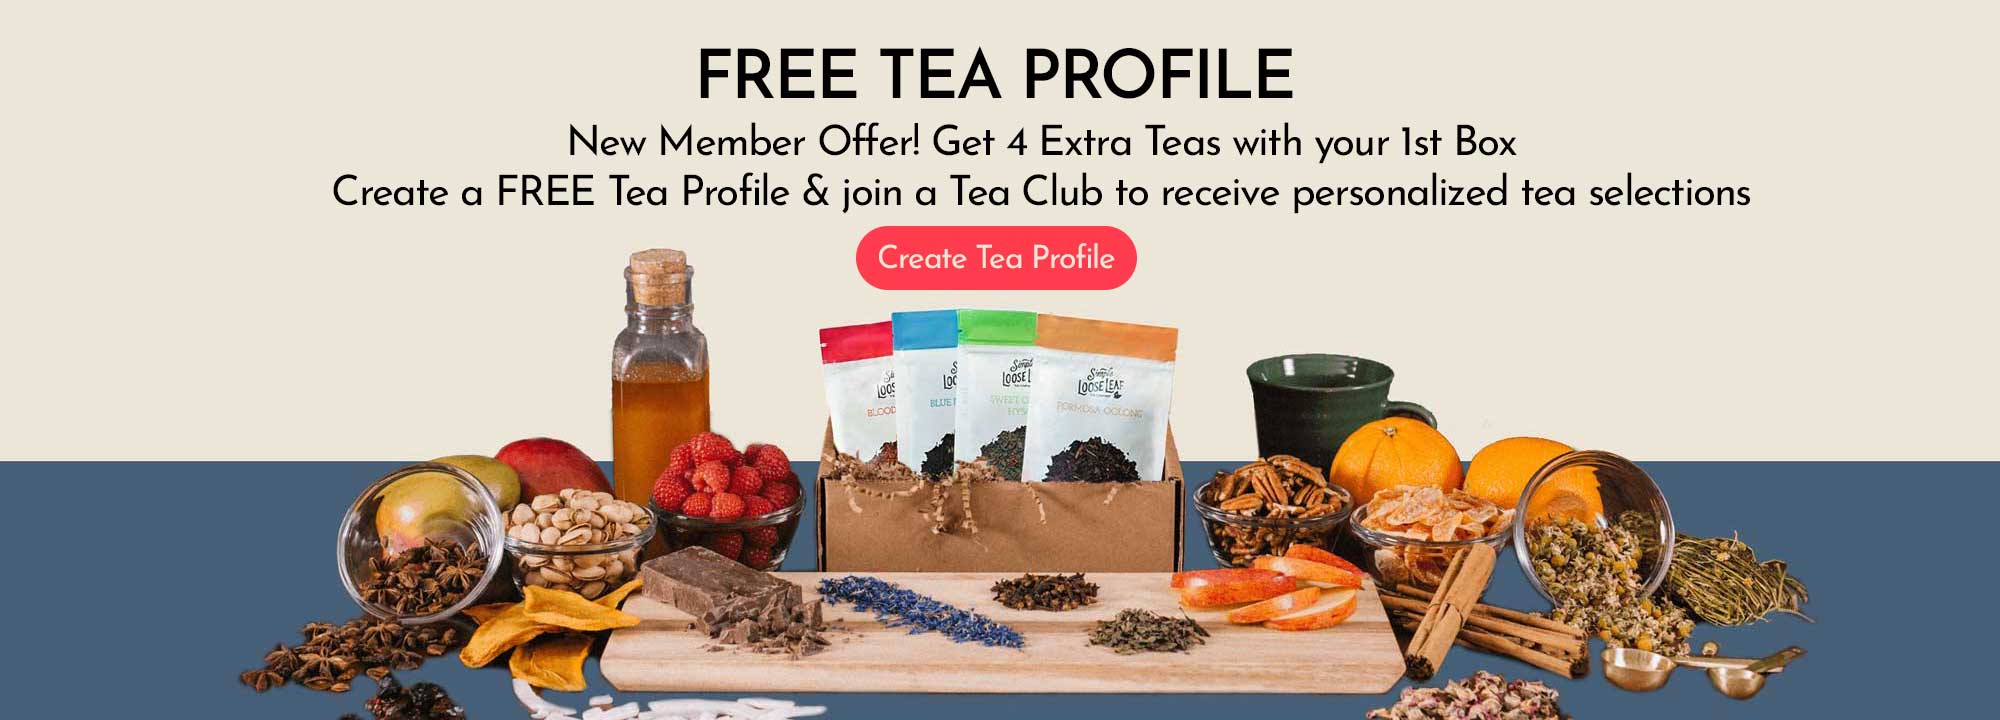 button to create Tea Profile for personalized tea membership